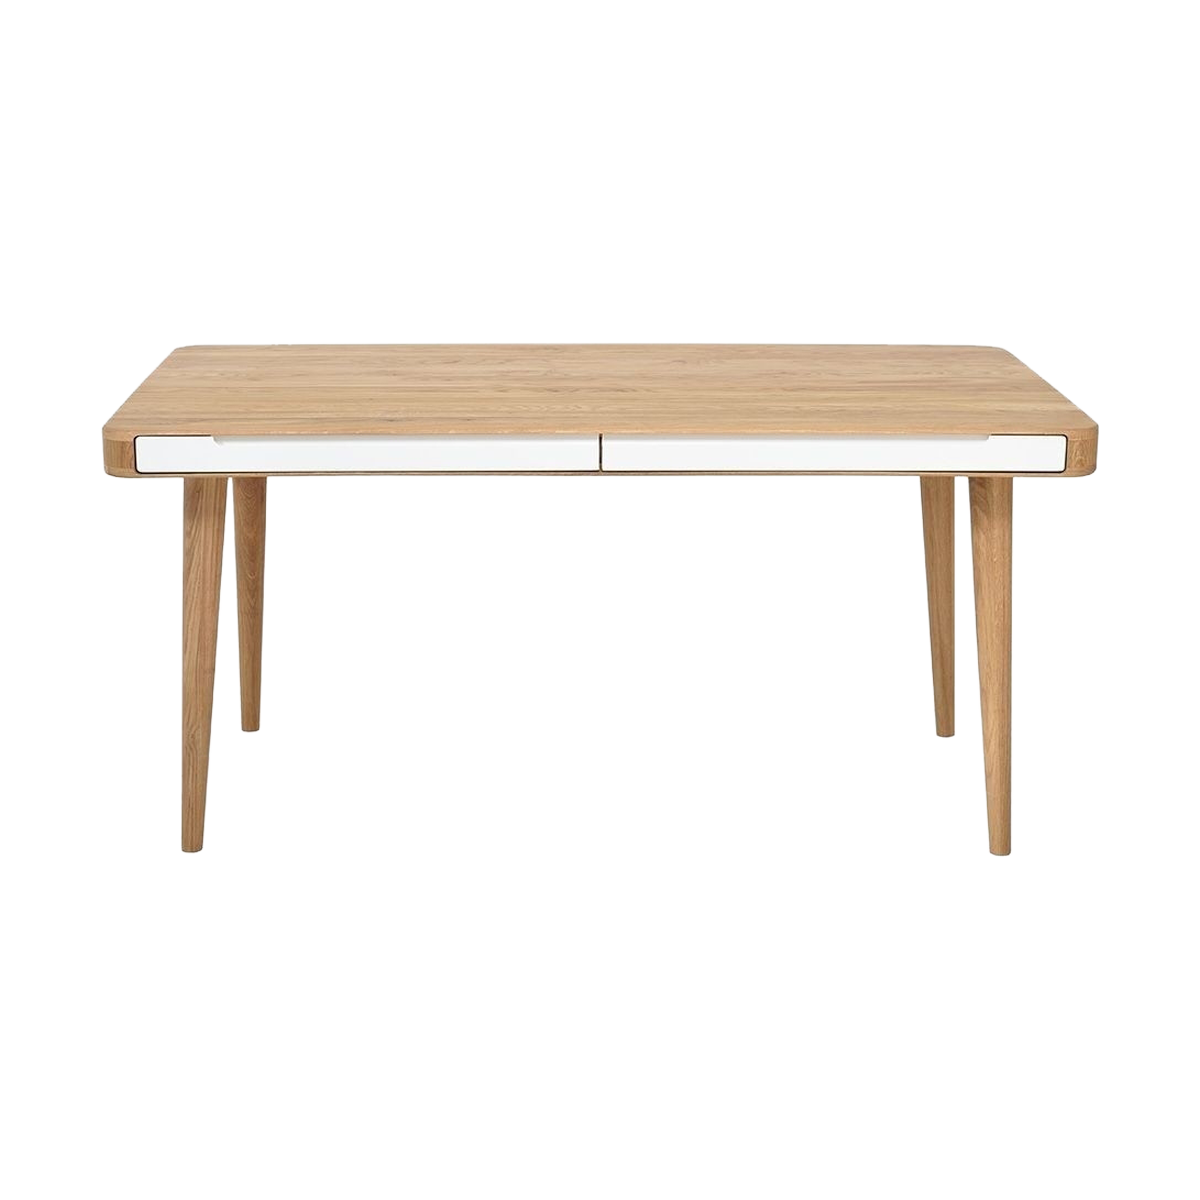 Ena table houten eettafel whitewash - 140 x 90 cm